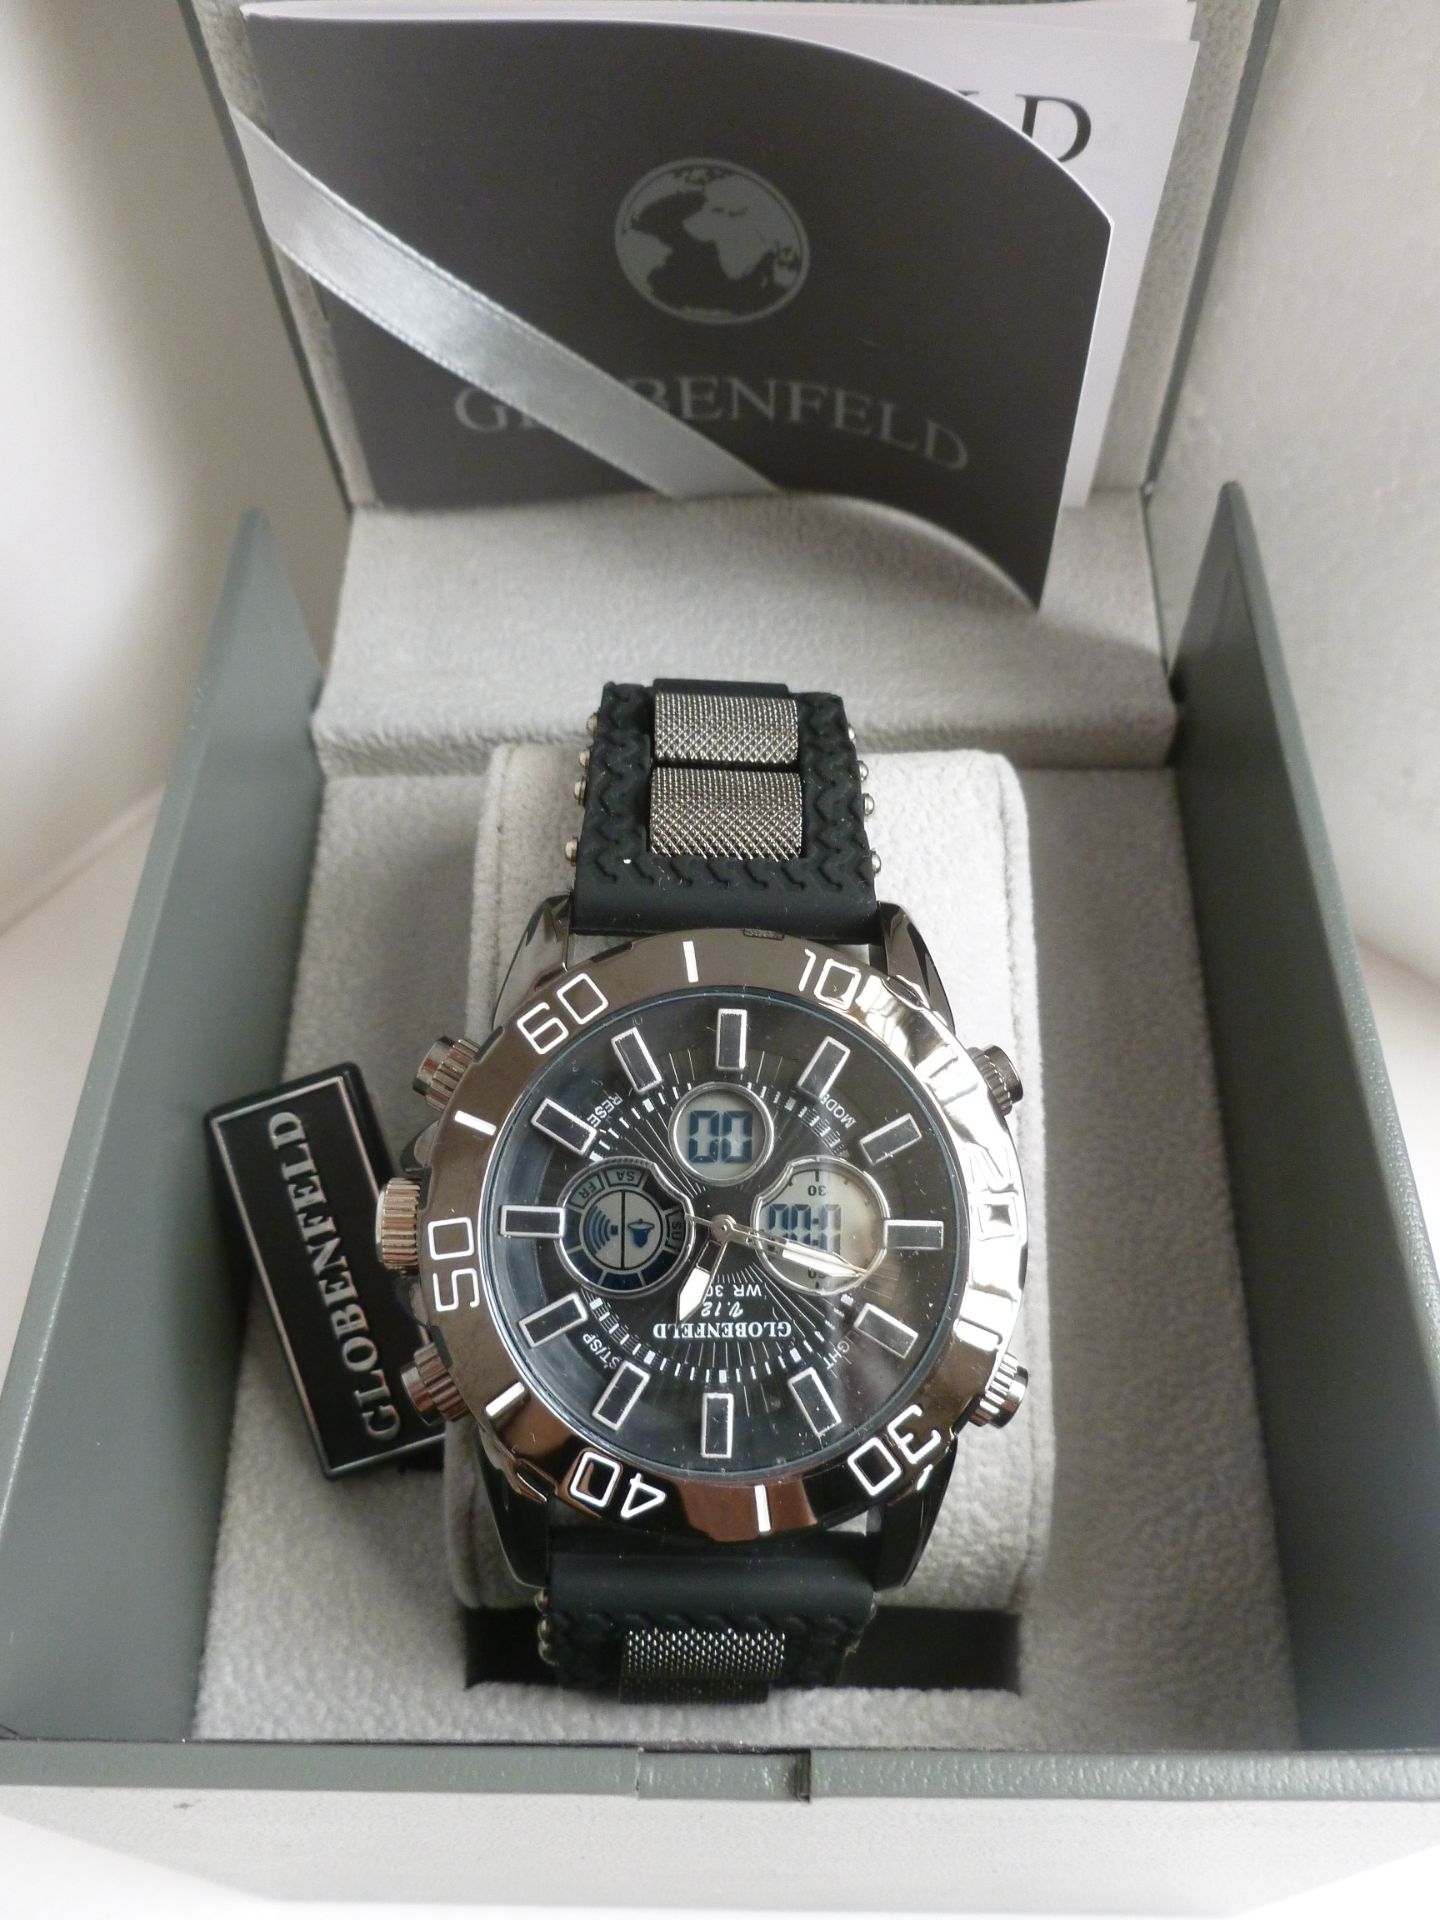 NO VAT!! Globenfeld Mens Black Face Rubber strapped Watch model 588 new in presentation box